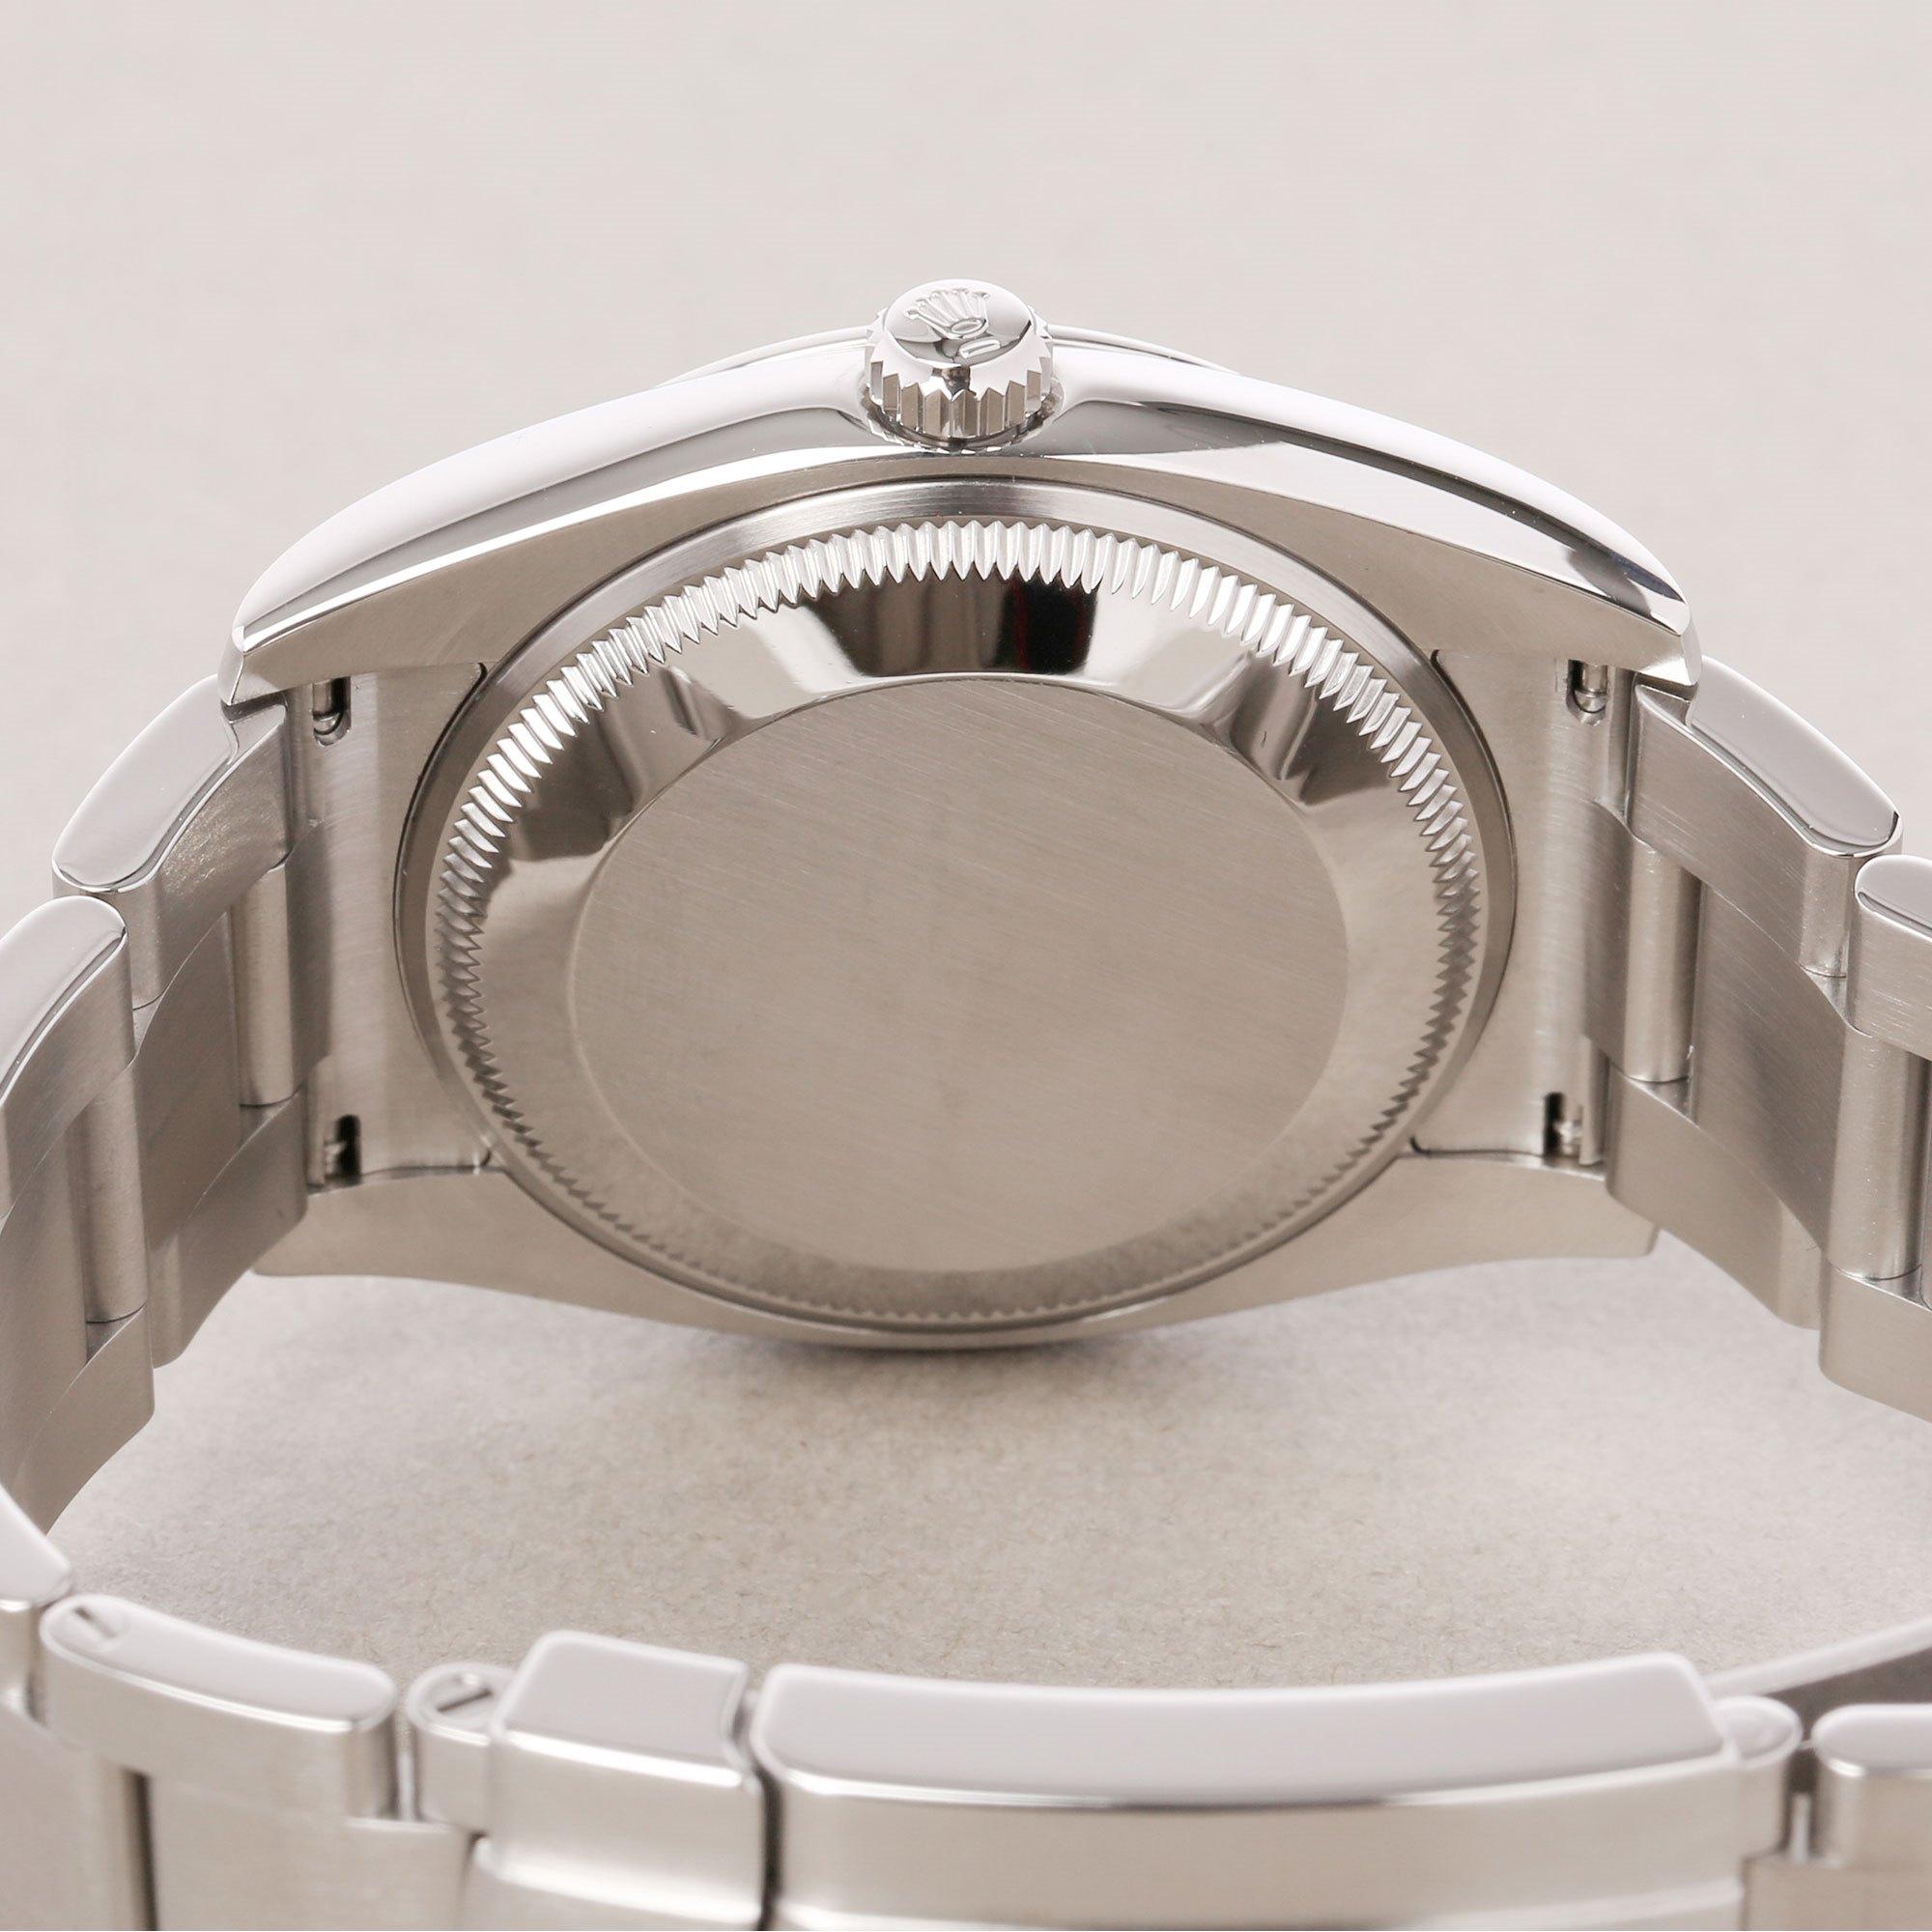 Rolex Air-King 35 114200 Unisex Stainless Steel Watch 1